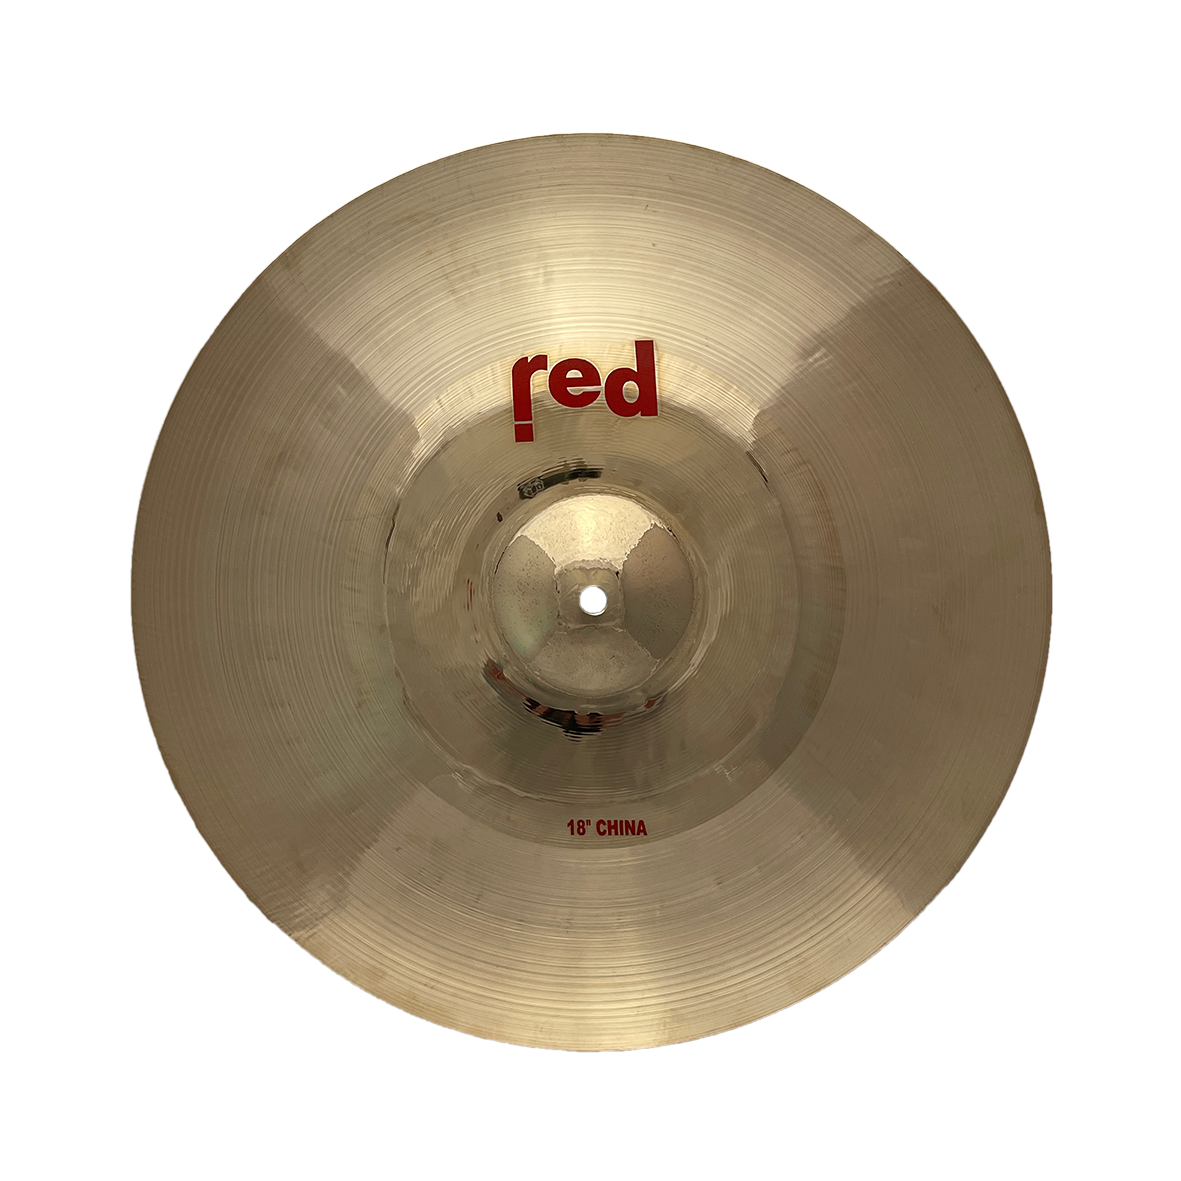 Red Cymbals Bright Hybrid Series China Cymbal